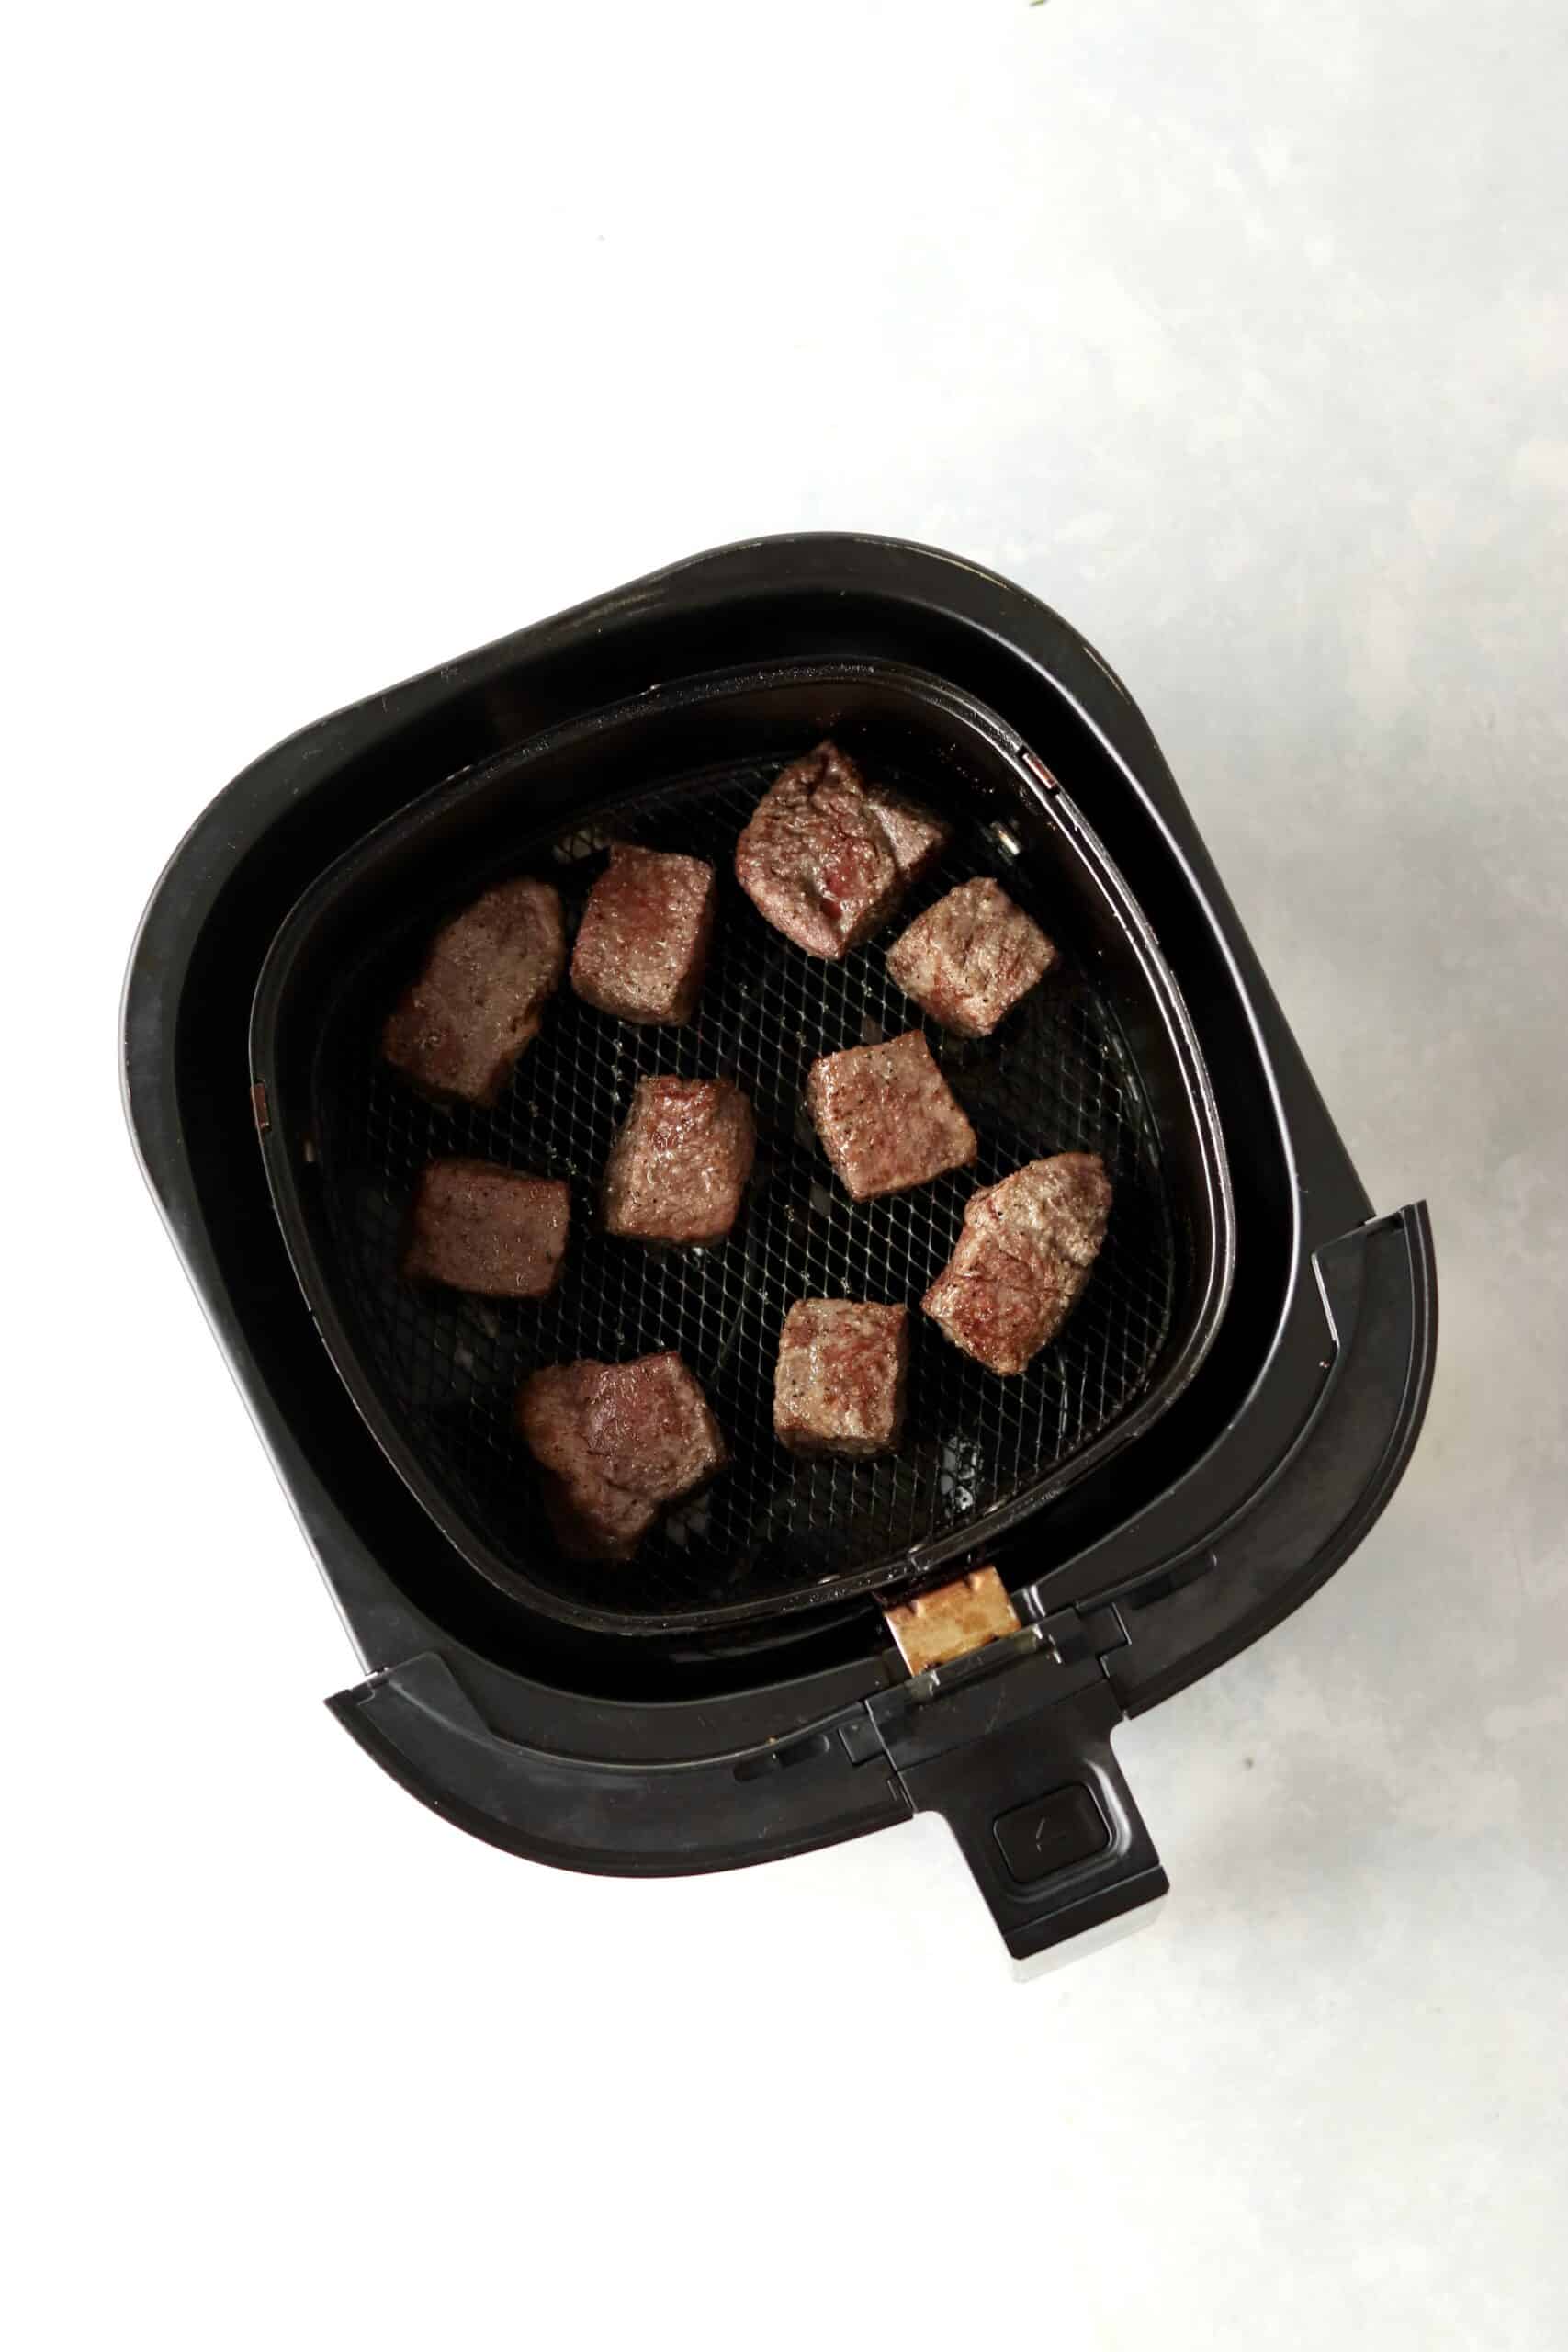 cooked steak tips in air fryer